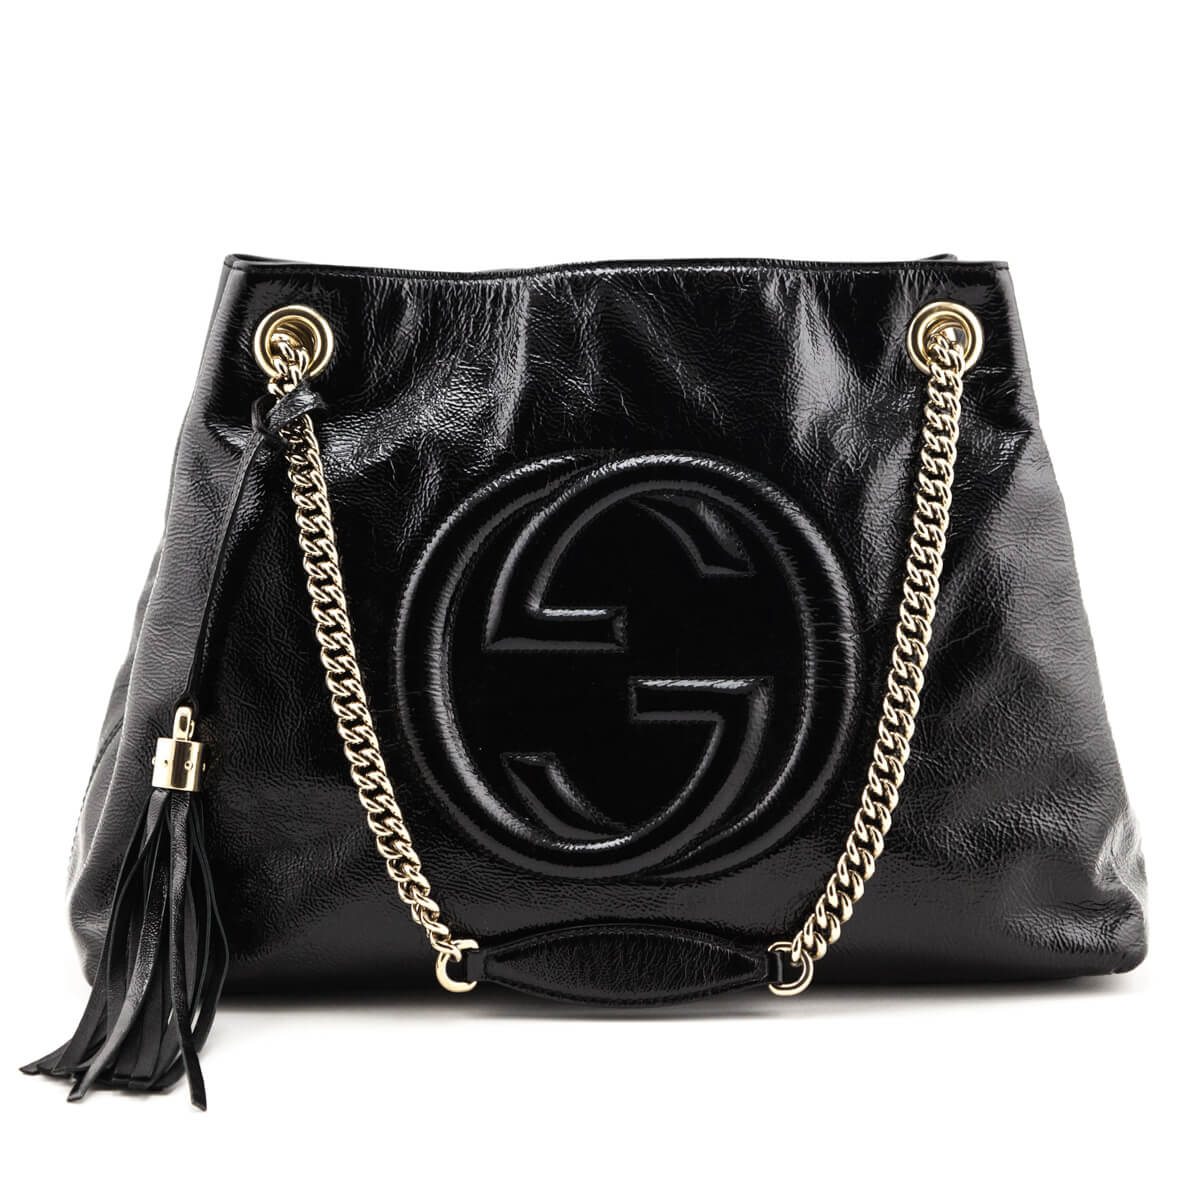 Gucci Black Patent Leather Soho Medium Chain Shoulder Bag - Gucci CA